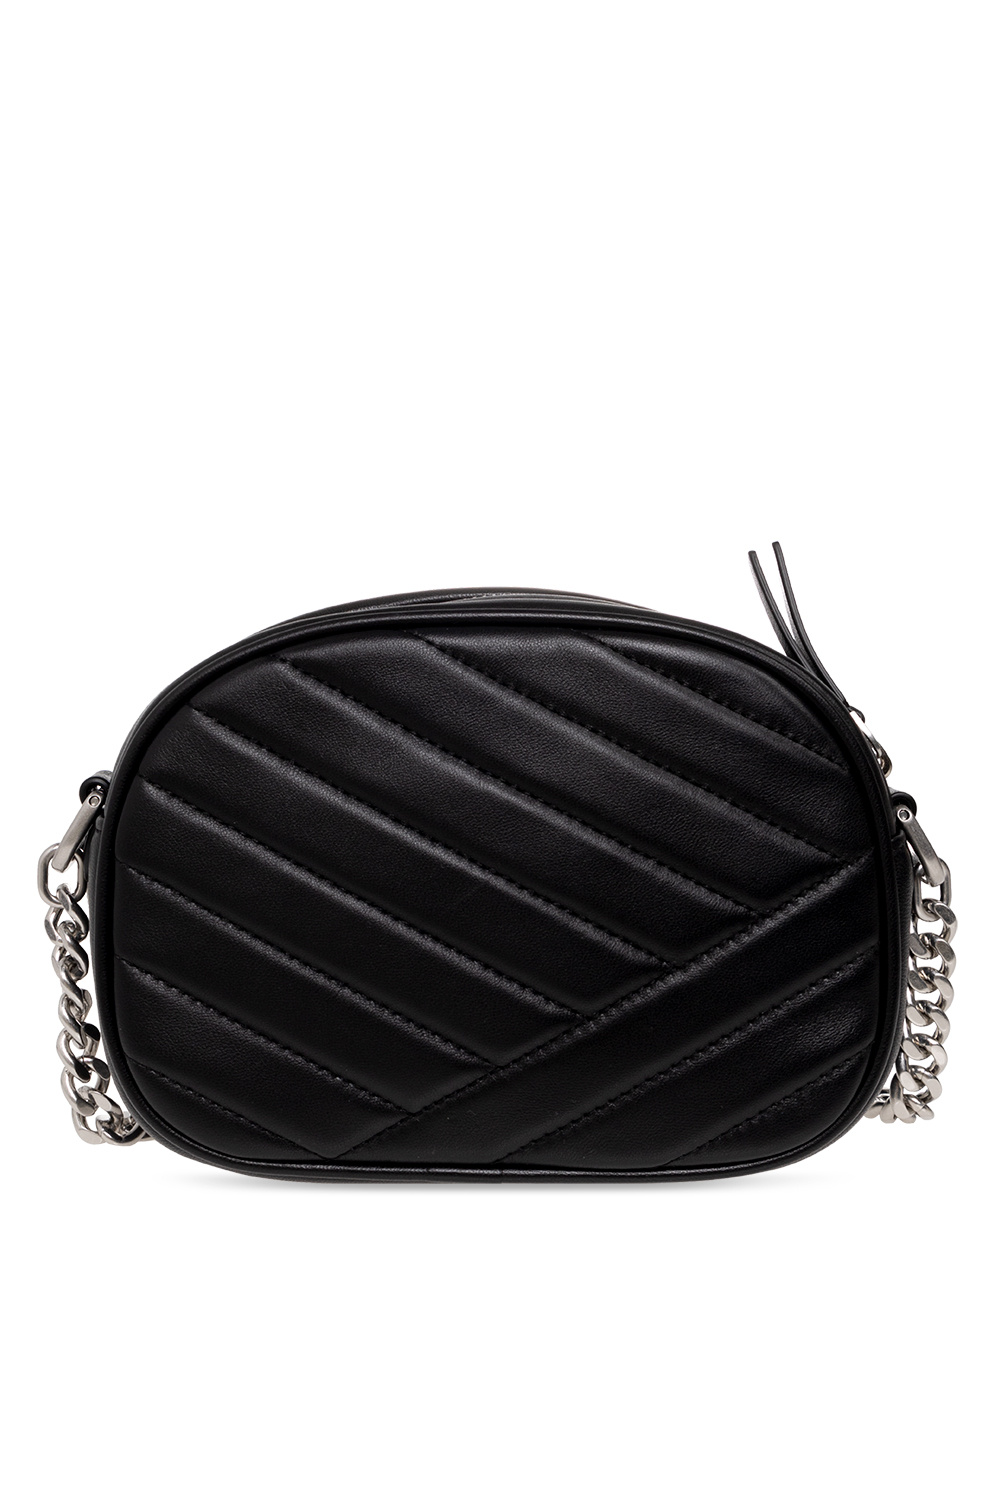  Tory Burch Women's Kira Chevron Small Camera Bag, Black, One  Size : Clothing, Shoes & Jewelry